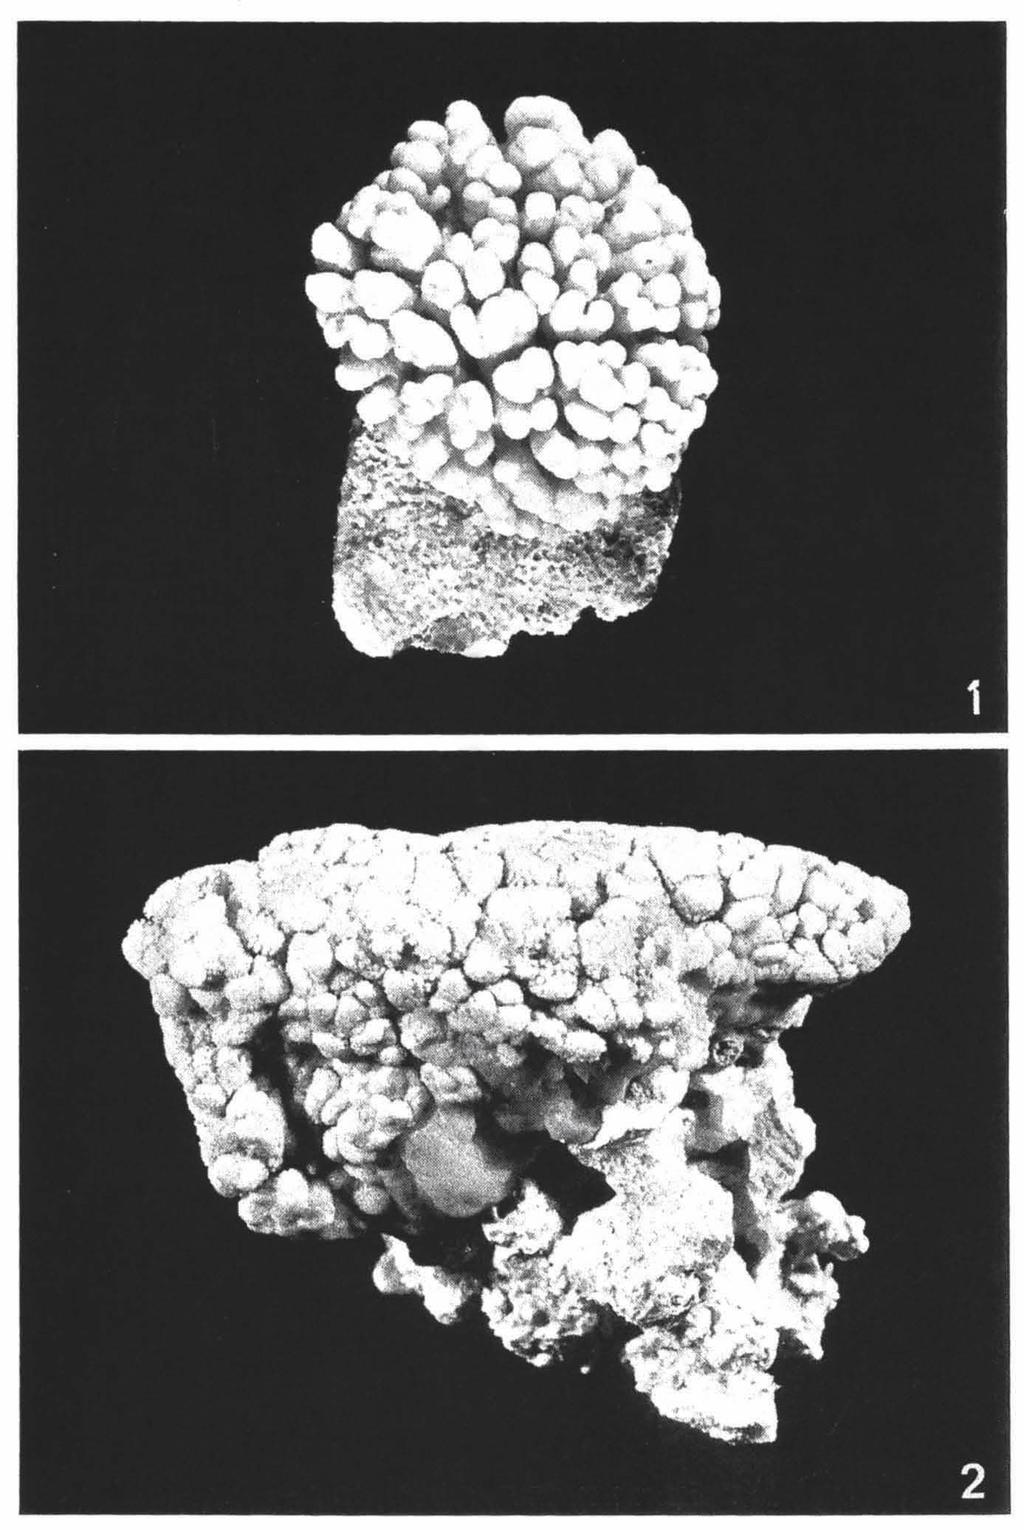 ZOOLOGISCHE VERHANDELINGEN 150 (1977) PL. I Fig. I. Cladiella devaneyi sp. nov.